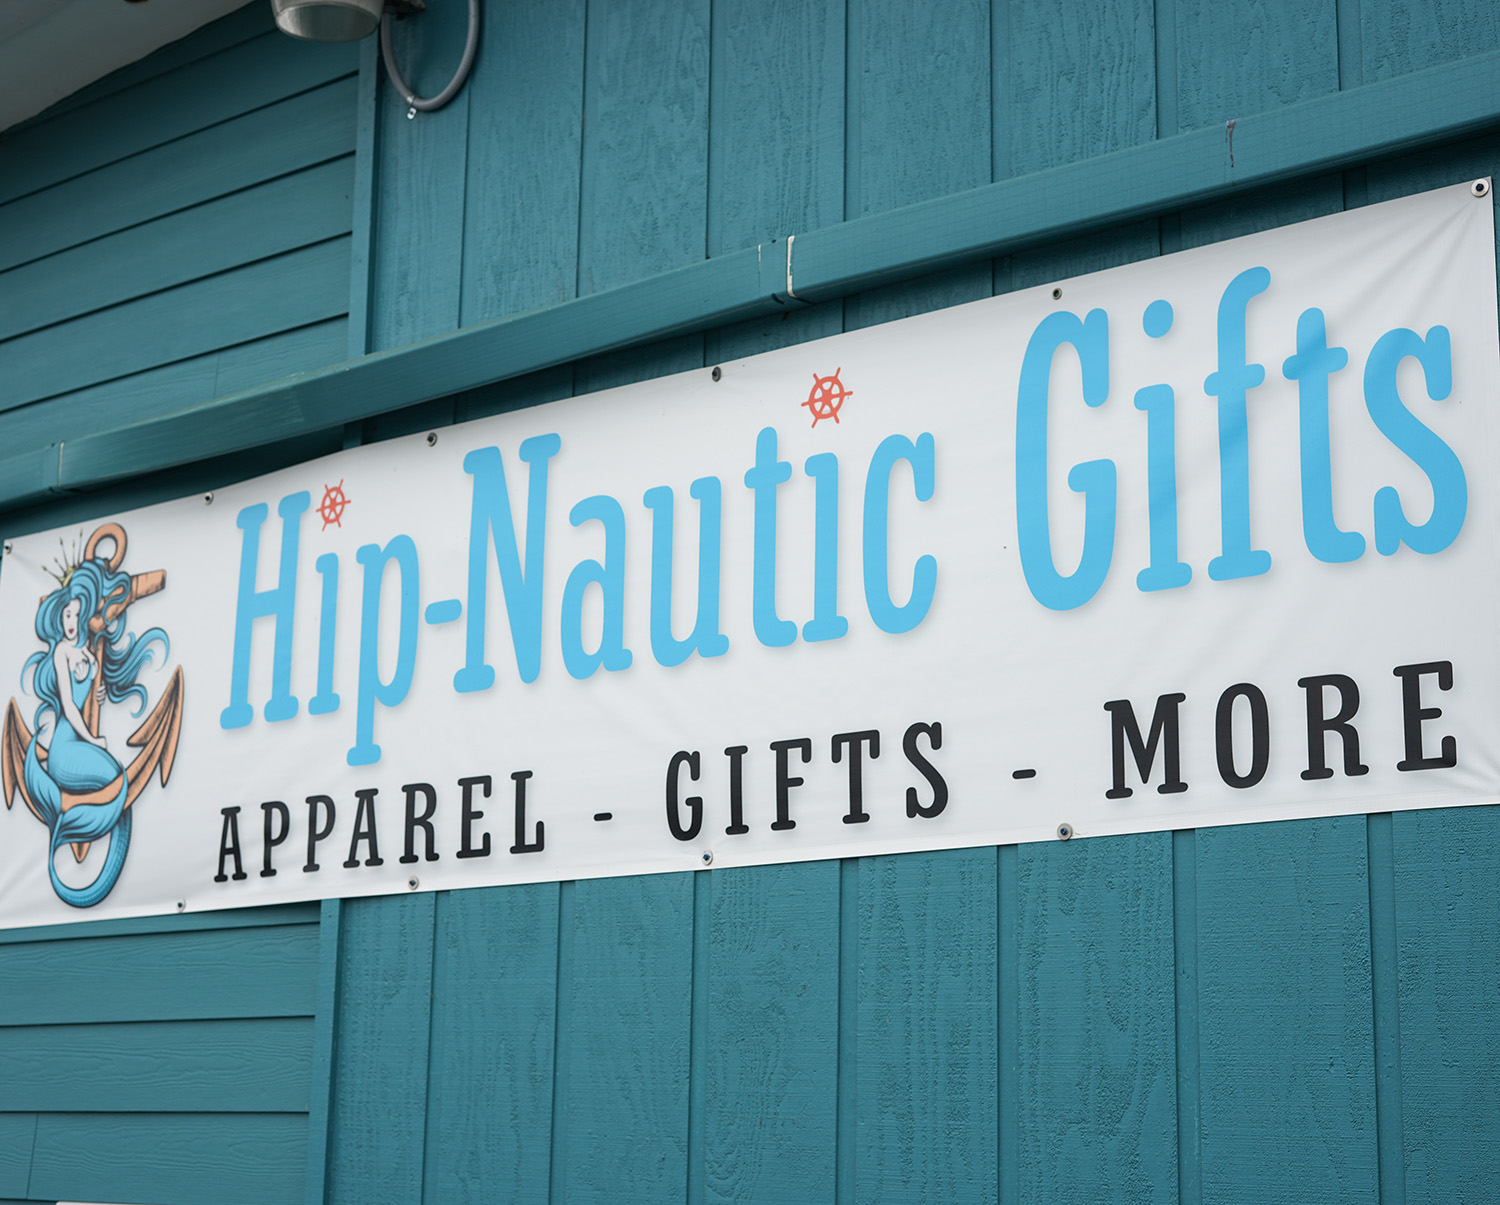 Hip-Nautic Gifts Harbor Oregon